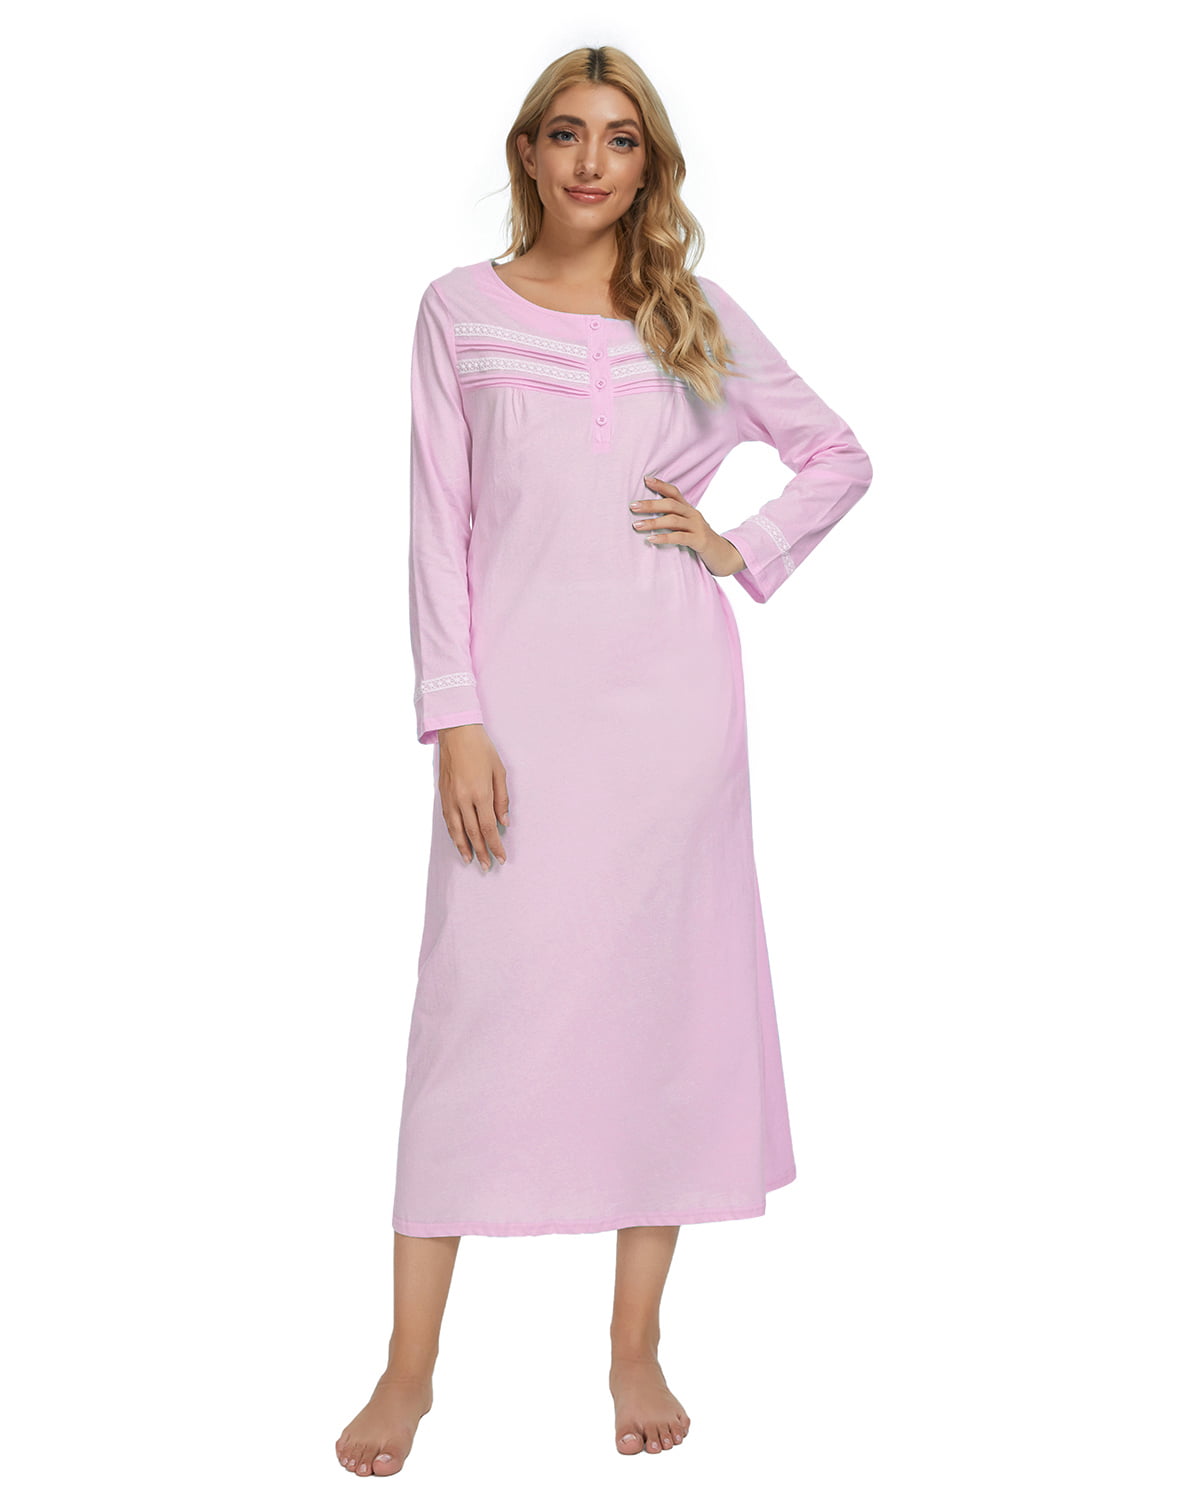 MINTLIMIT Womens Nightdresses Round Neck Sleepwear Short Sleeve Casual Nightshirt Sleep Shirt Dress with Pockets